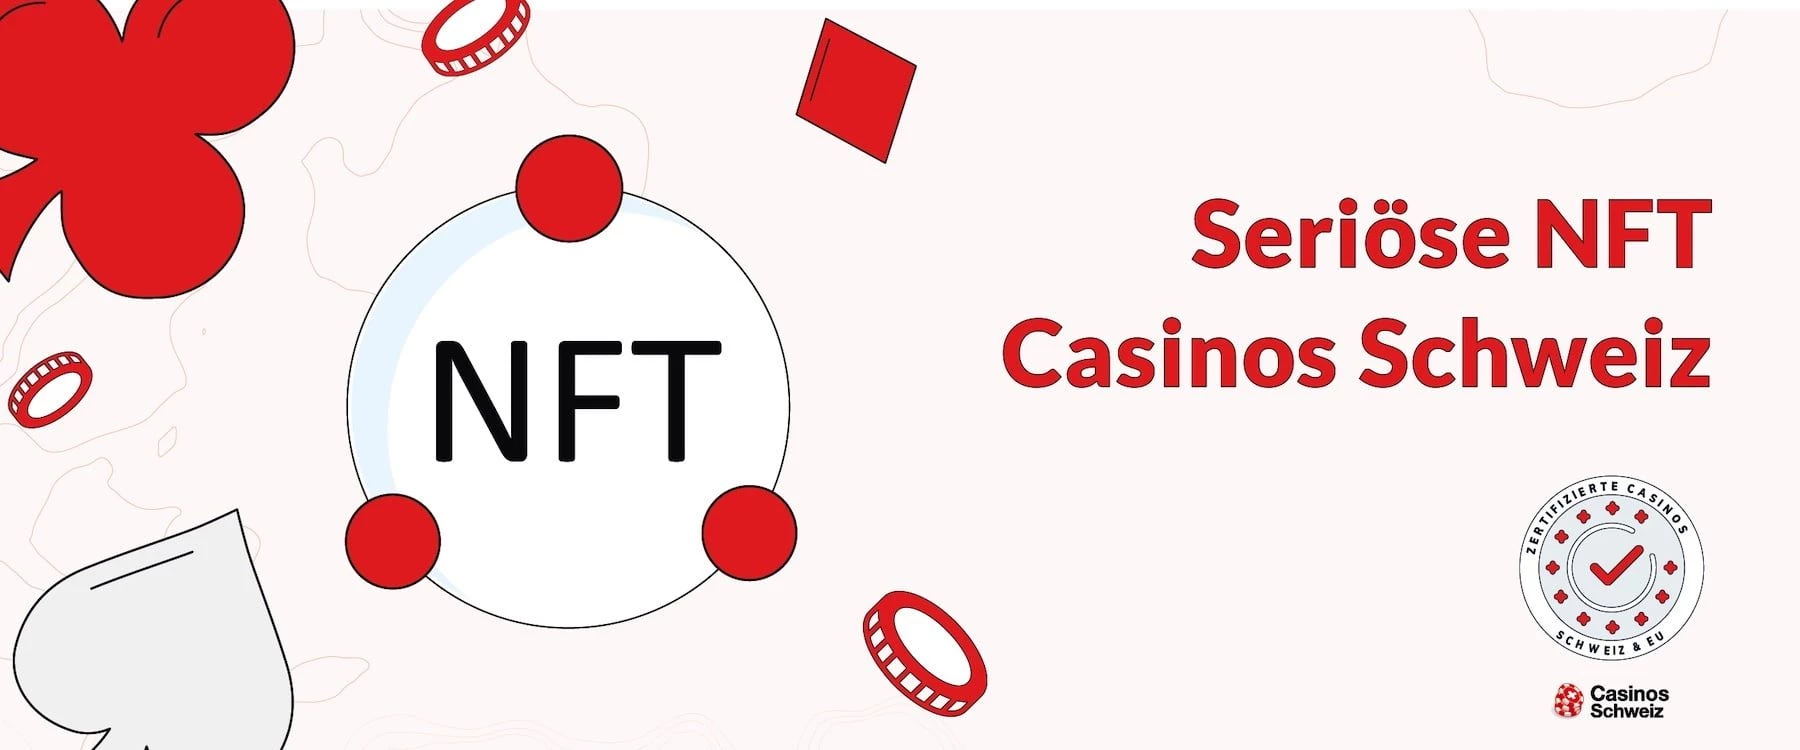 Serioese NFT Casinos 